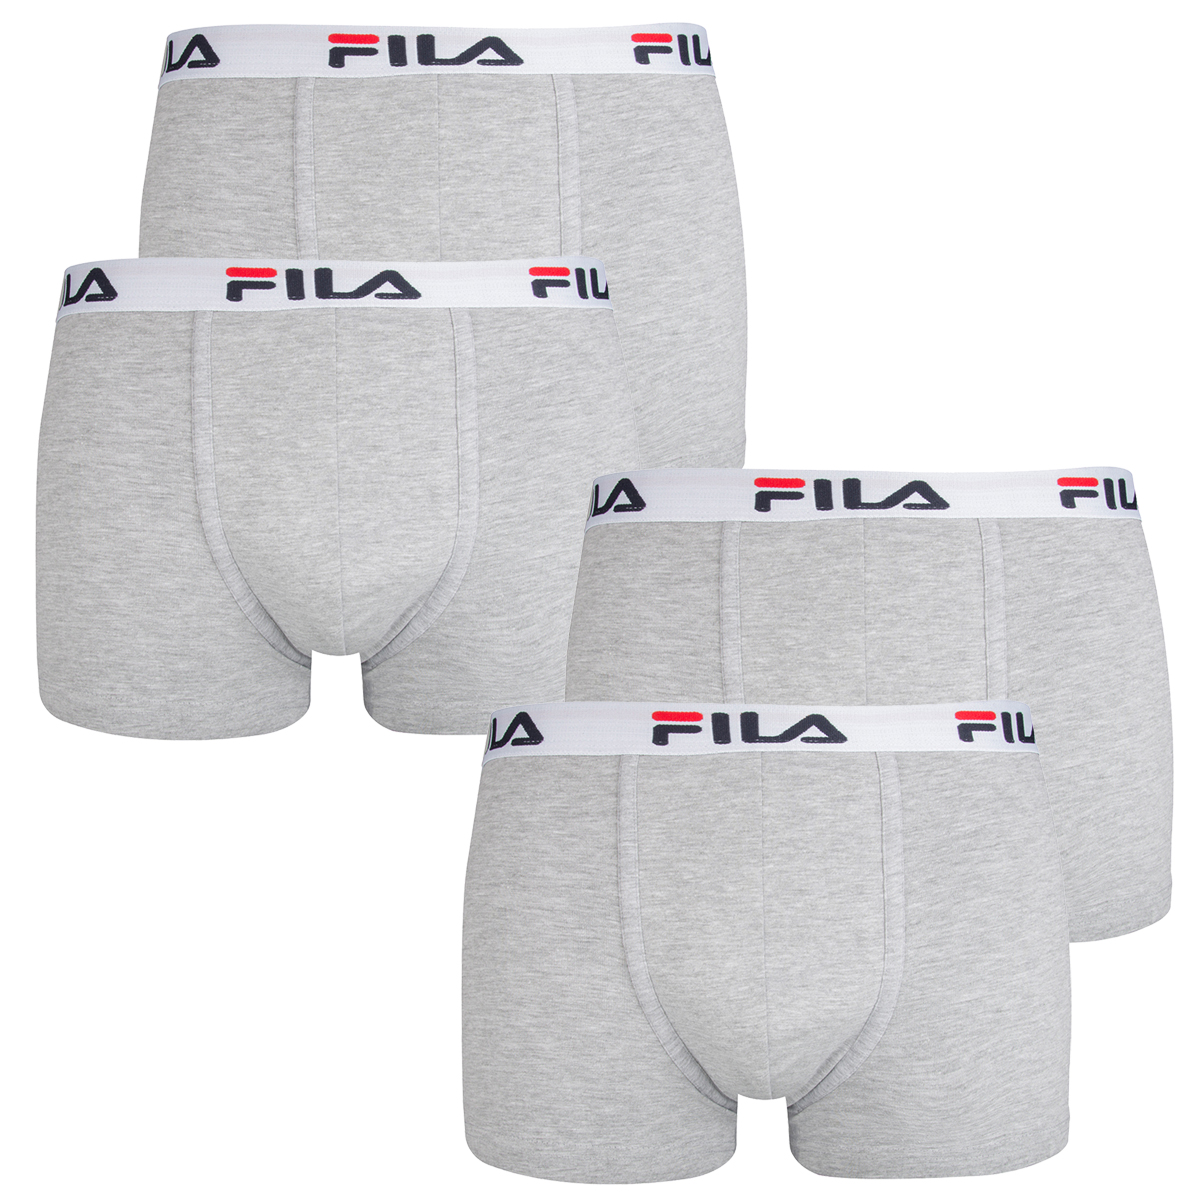 Fila 4er Vorteilspack Herren Boxershorts - Logo Pants - Einfarbig - Bequem - Stretch - viele Farben (Grau, XL - 4er Pack)